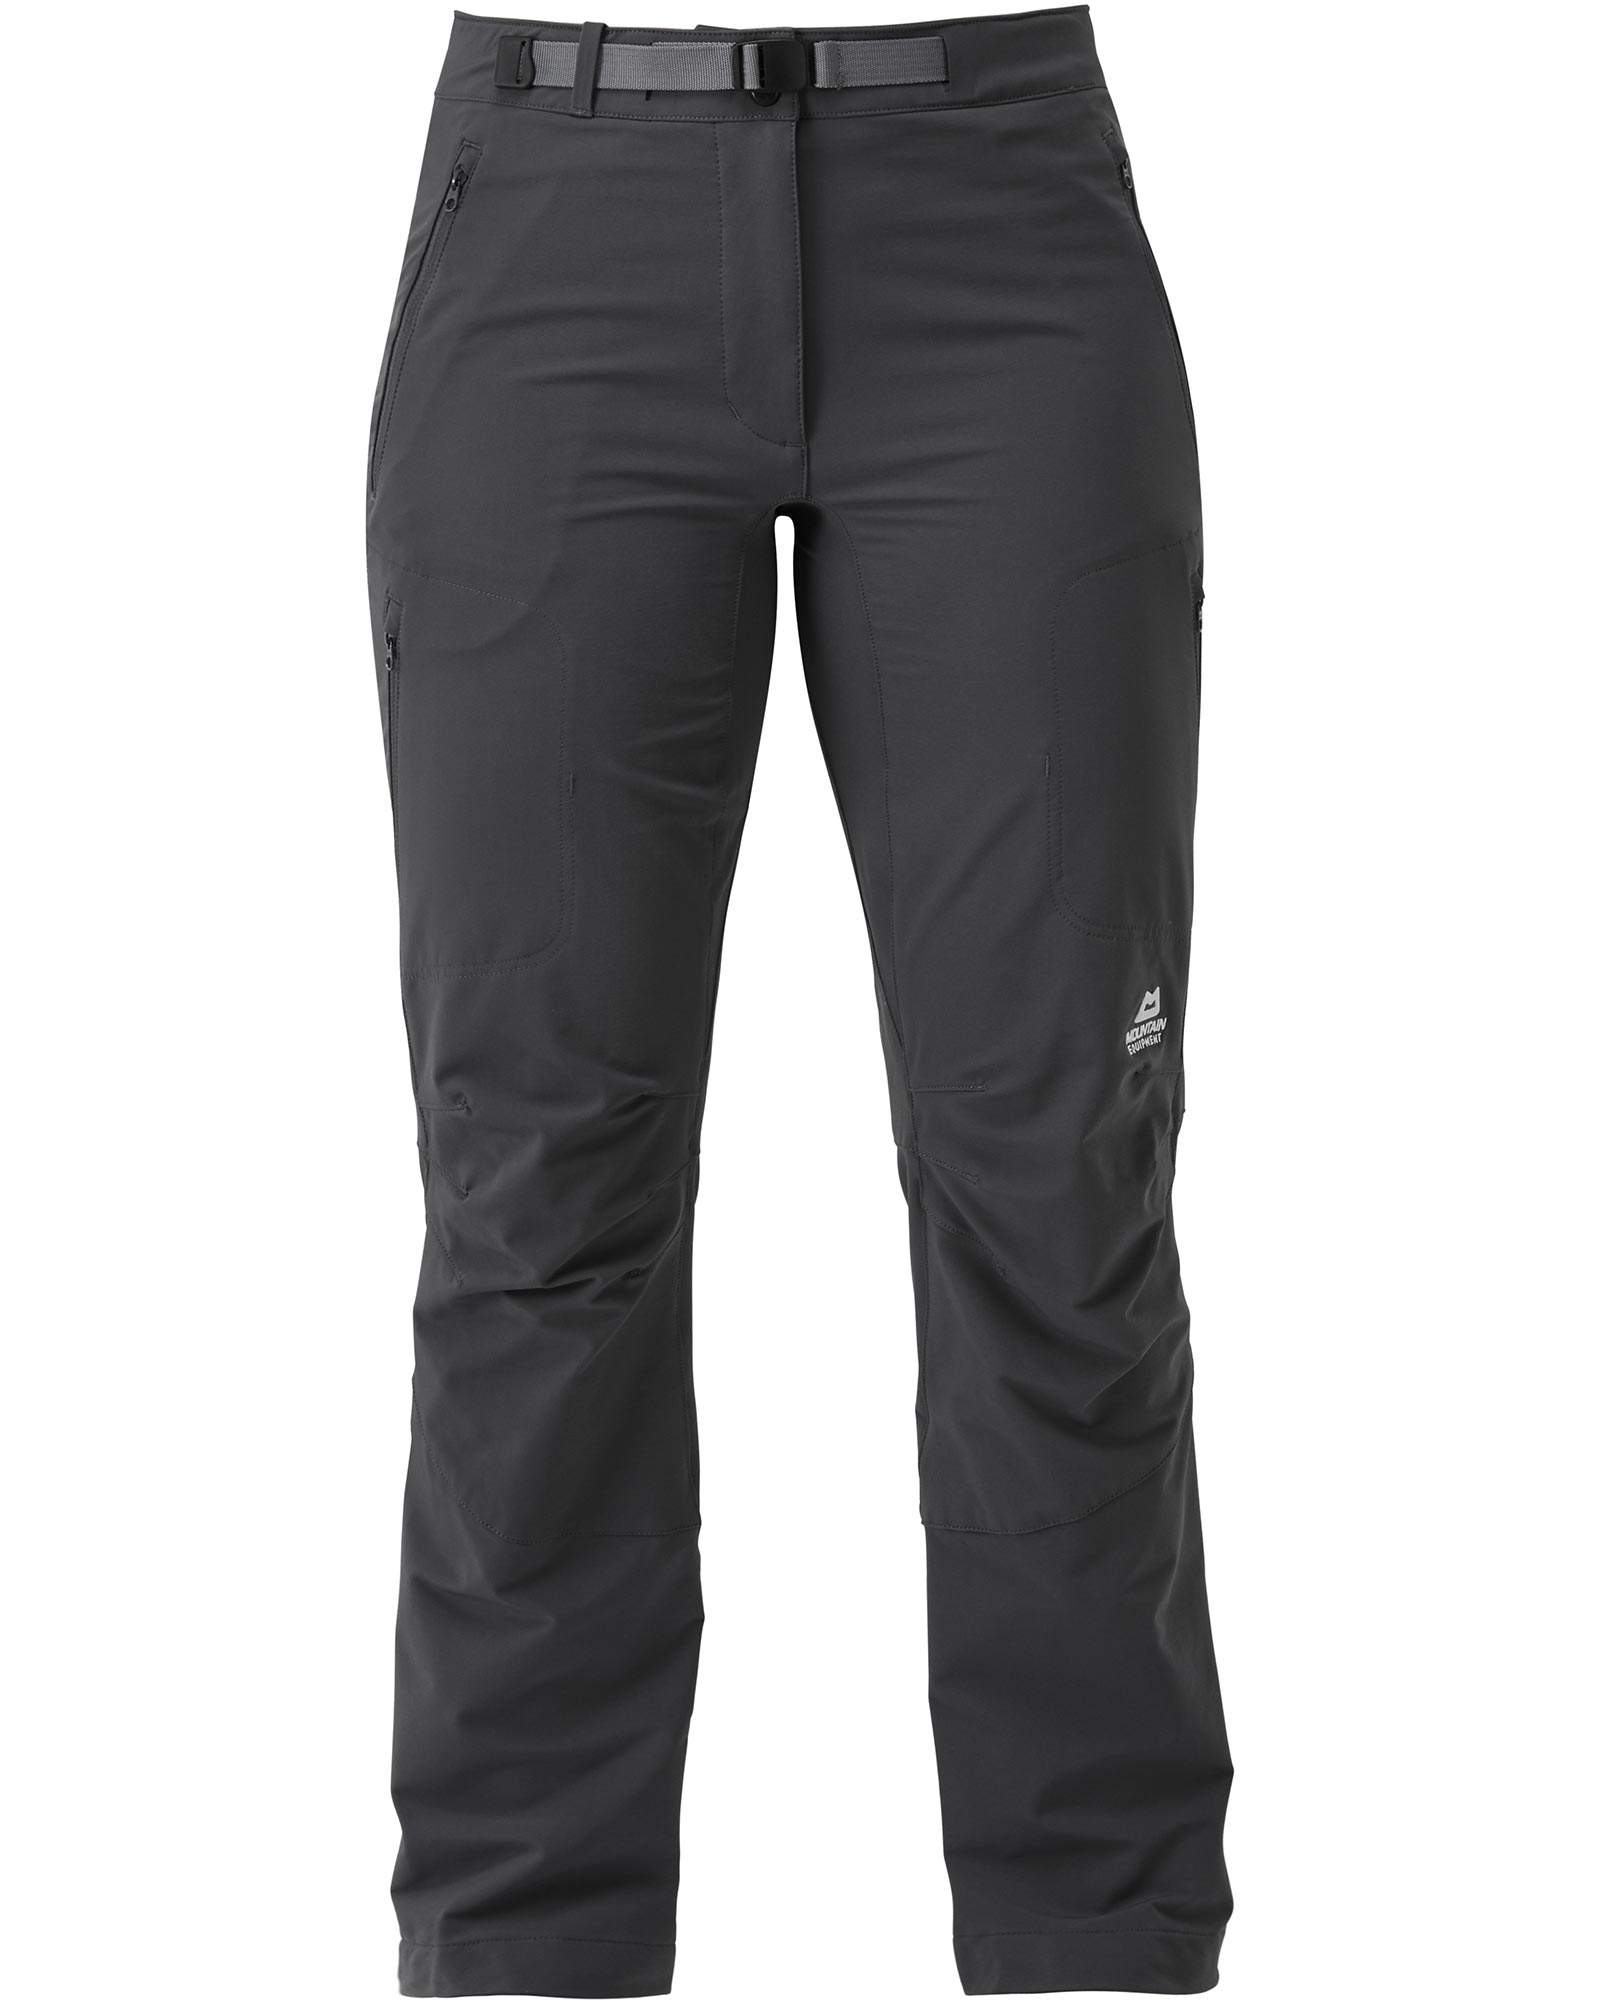 Mountain Equipment Chamois Women’s Pants   Short Leg - Anvil Grey 14